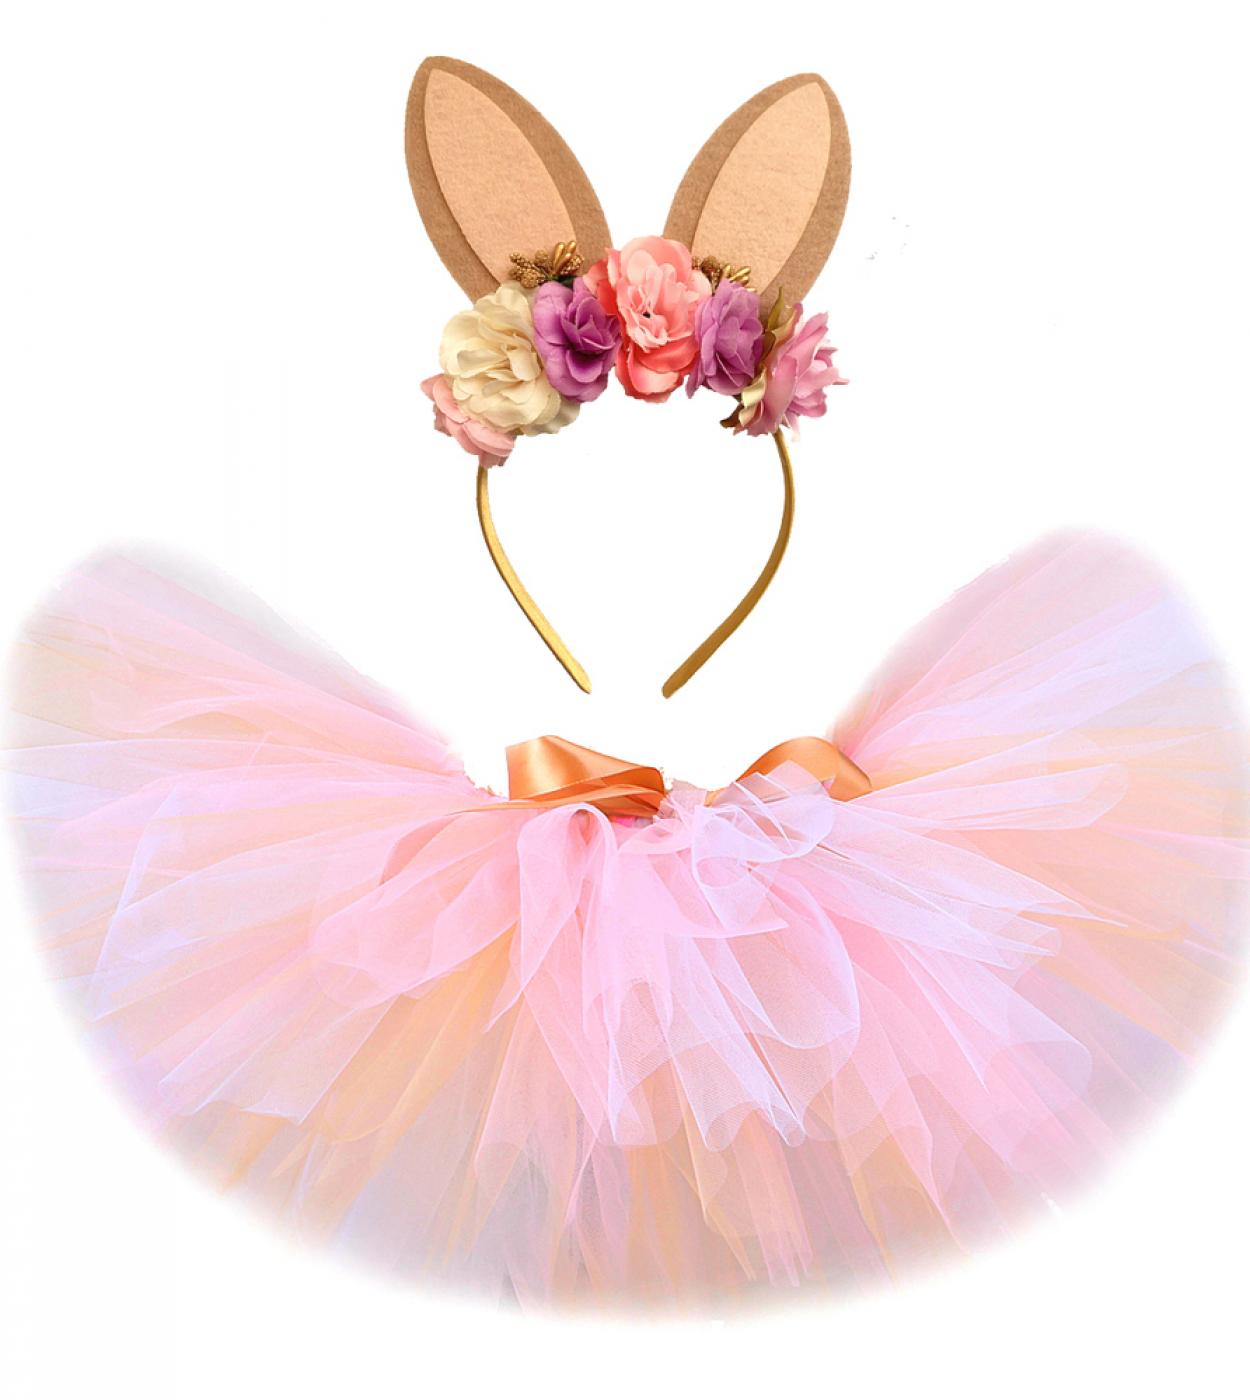 Falda tutú de conejito de Pascua para niñas, disfraz para niños, tutús esponjosos de conejo, faldas de tul para niñas pequeñas, 